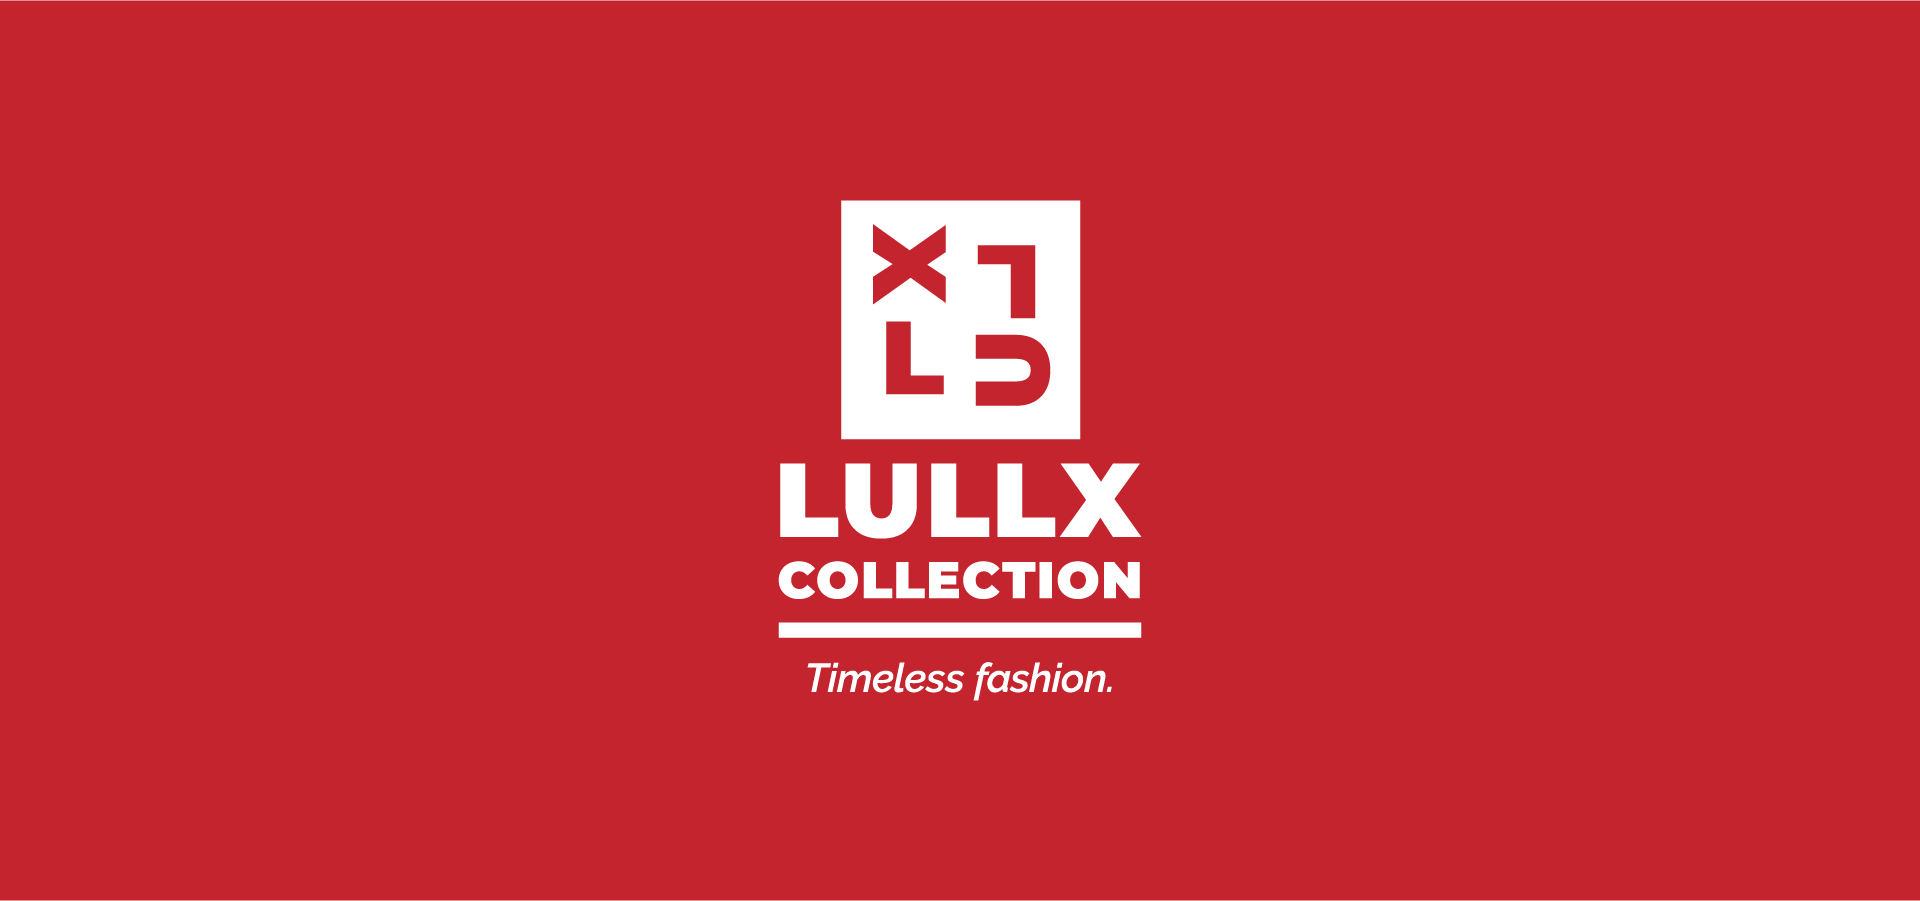 Lullx Collection logo on dark background